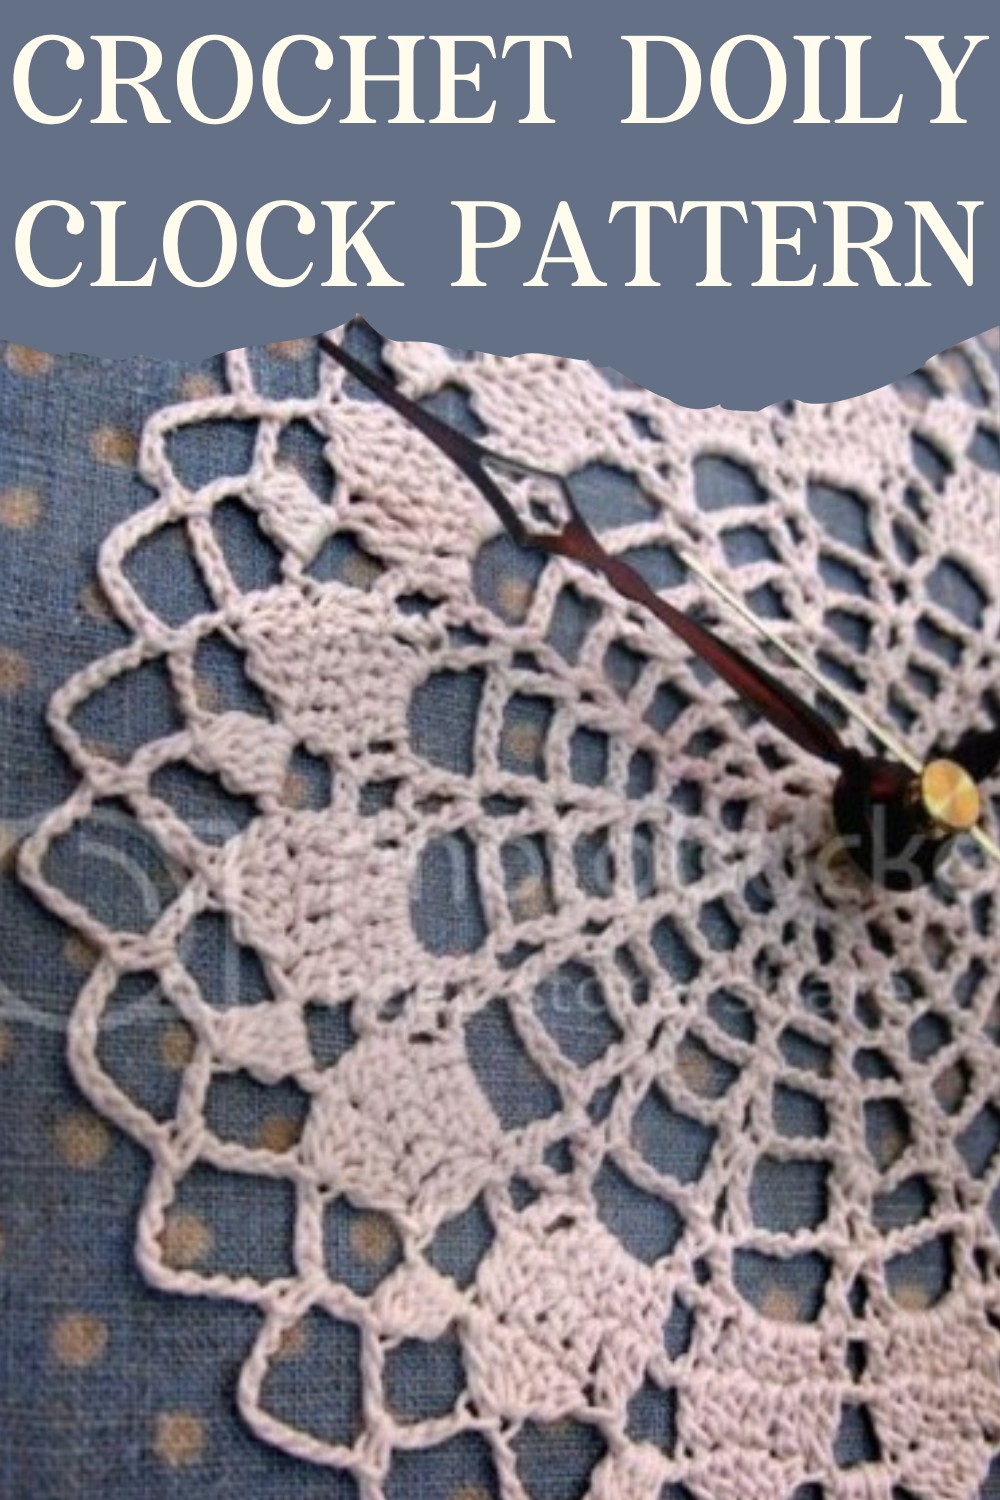 Crochet Doily Clock Pattern